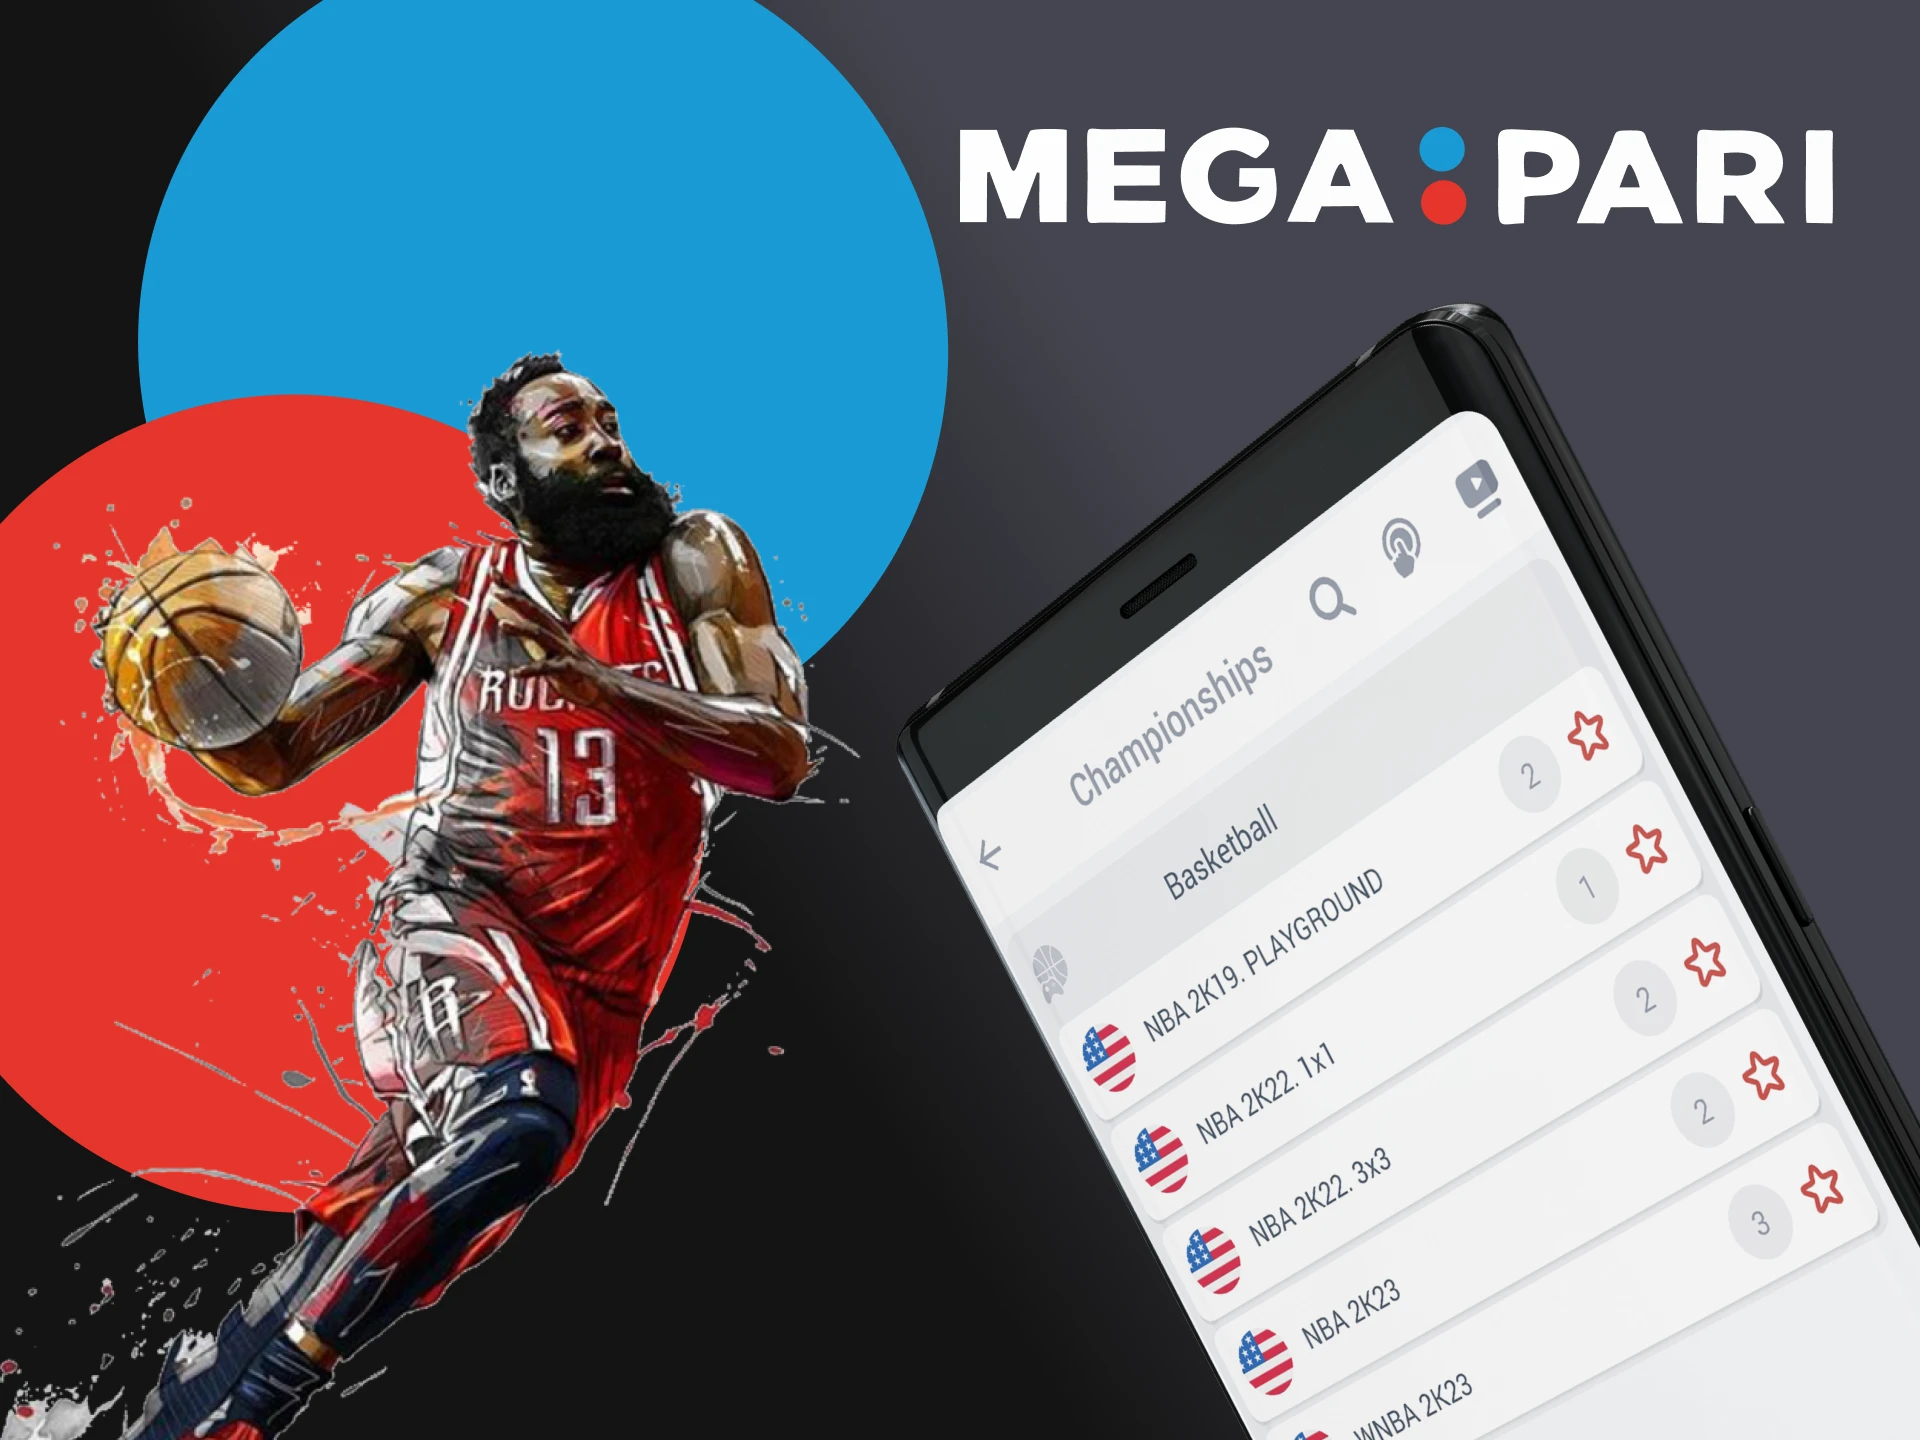 Make a bet on virtual sports through the Megapari mobile application.